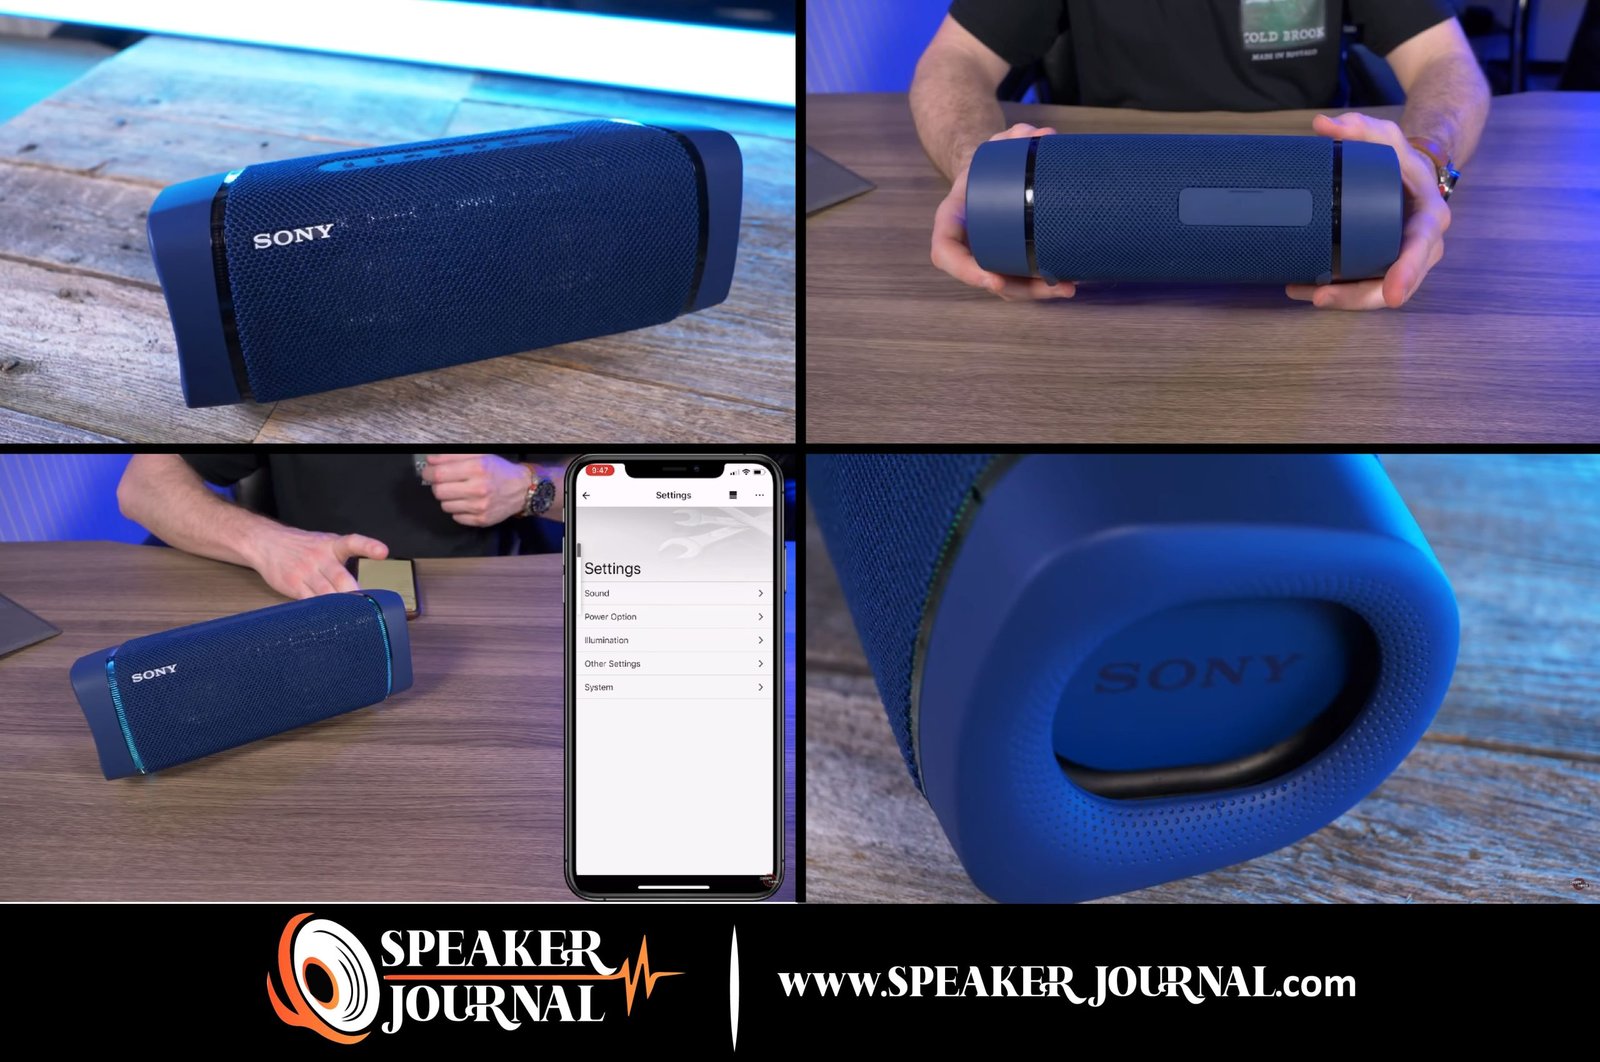 Best Wireless Speakers For Macbook Pro by speakerjournal.com